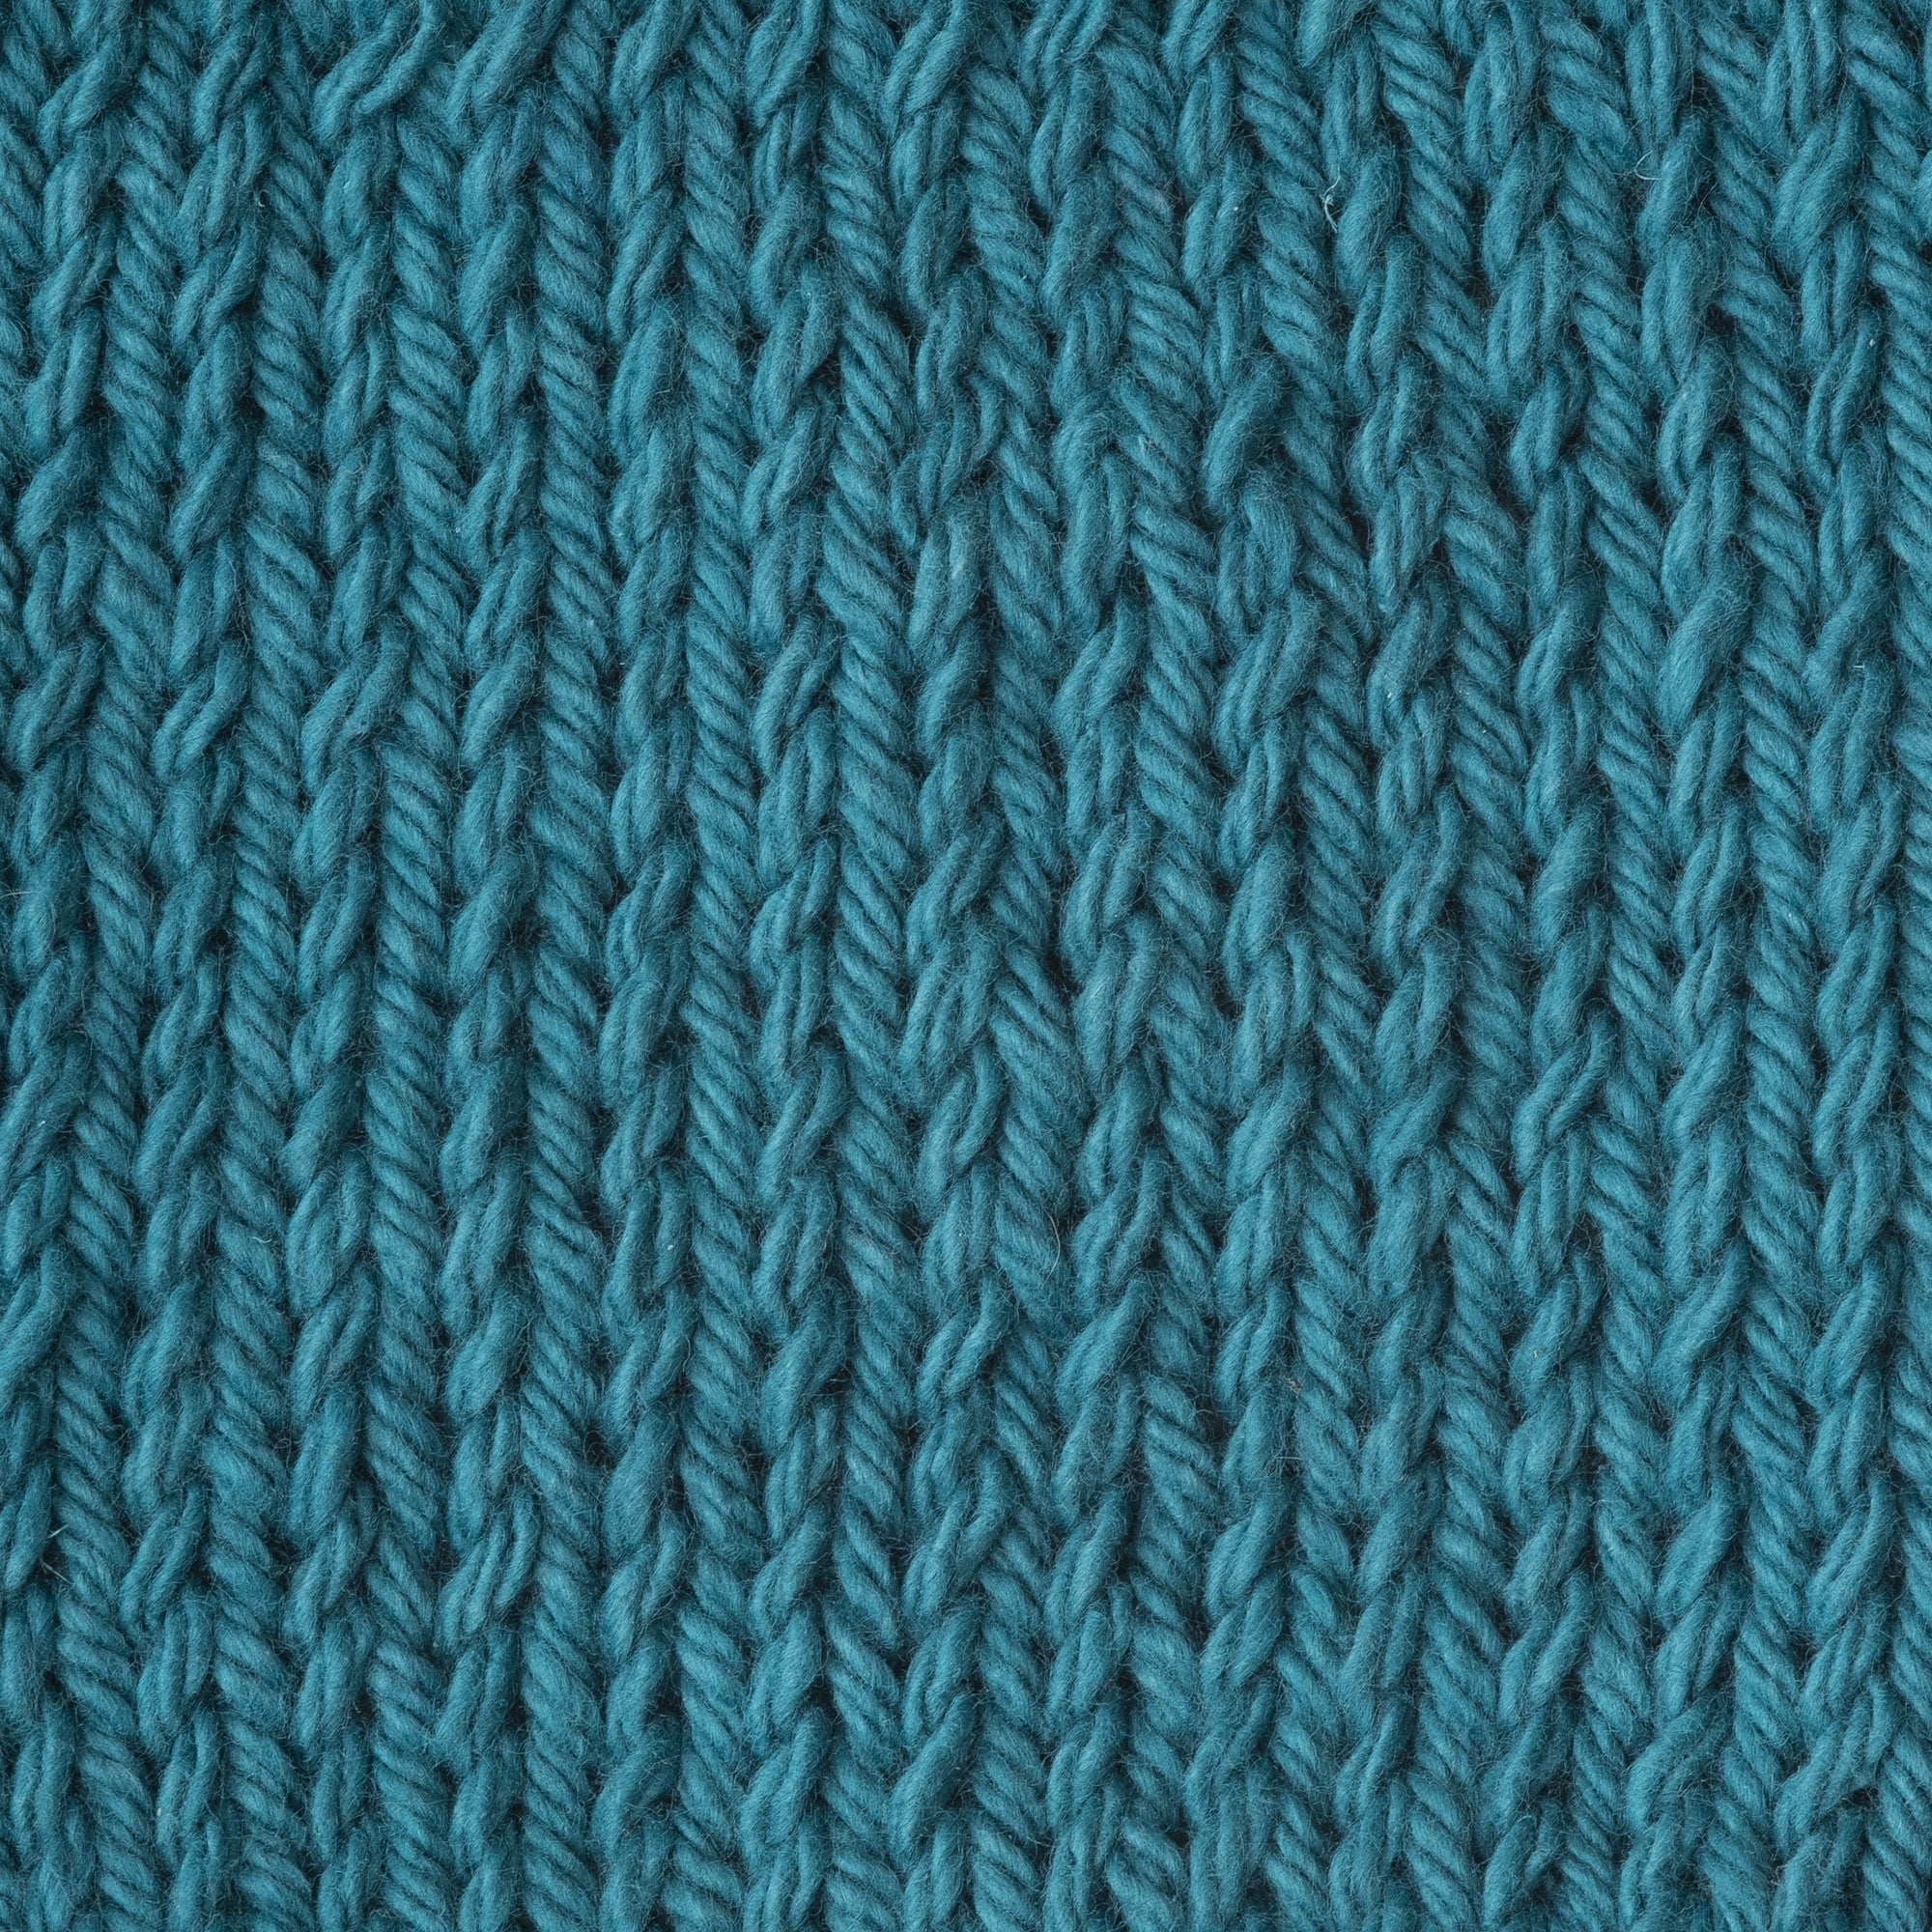 Bernat Handicrafter #4 Medium Cotton Yarn, Mod Blue 1.75oz/50g, 80 Yards (6 Pack), Size: Six-Pack